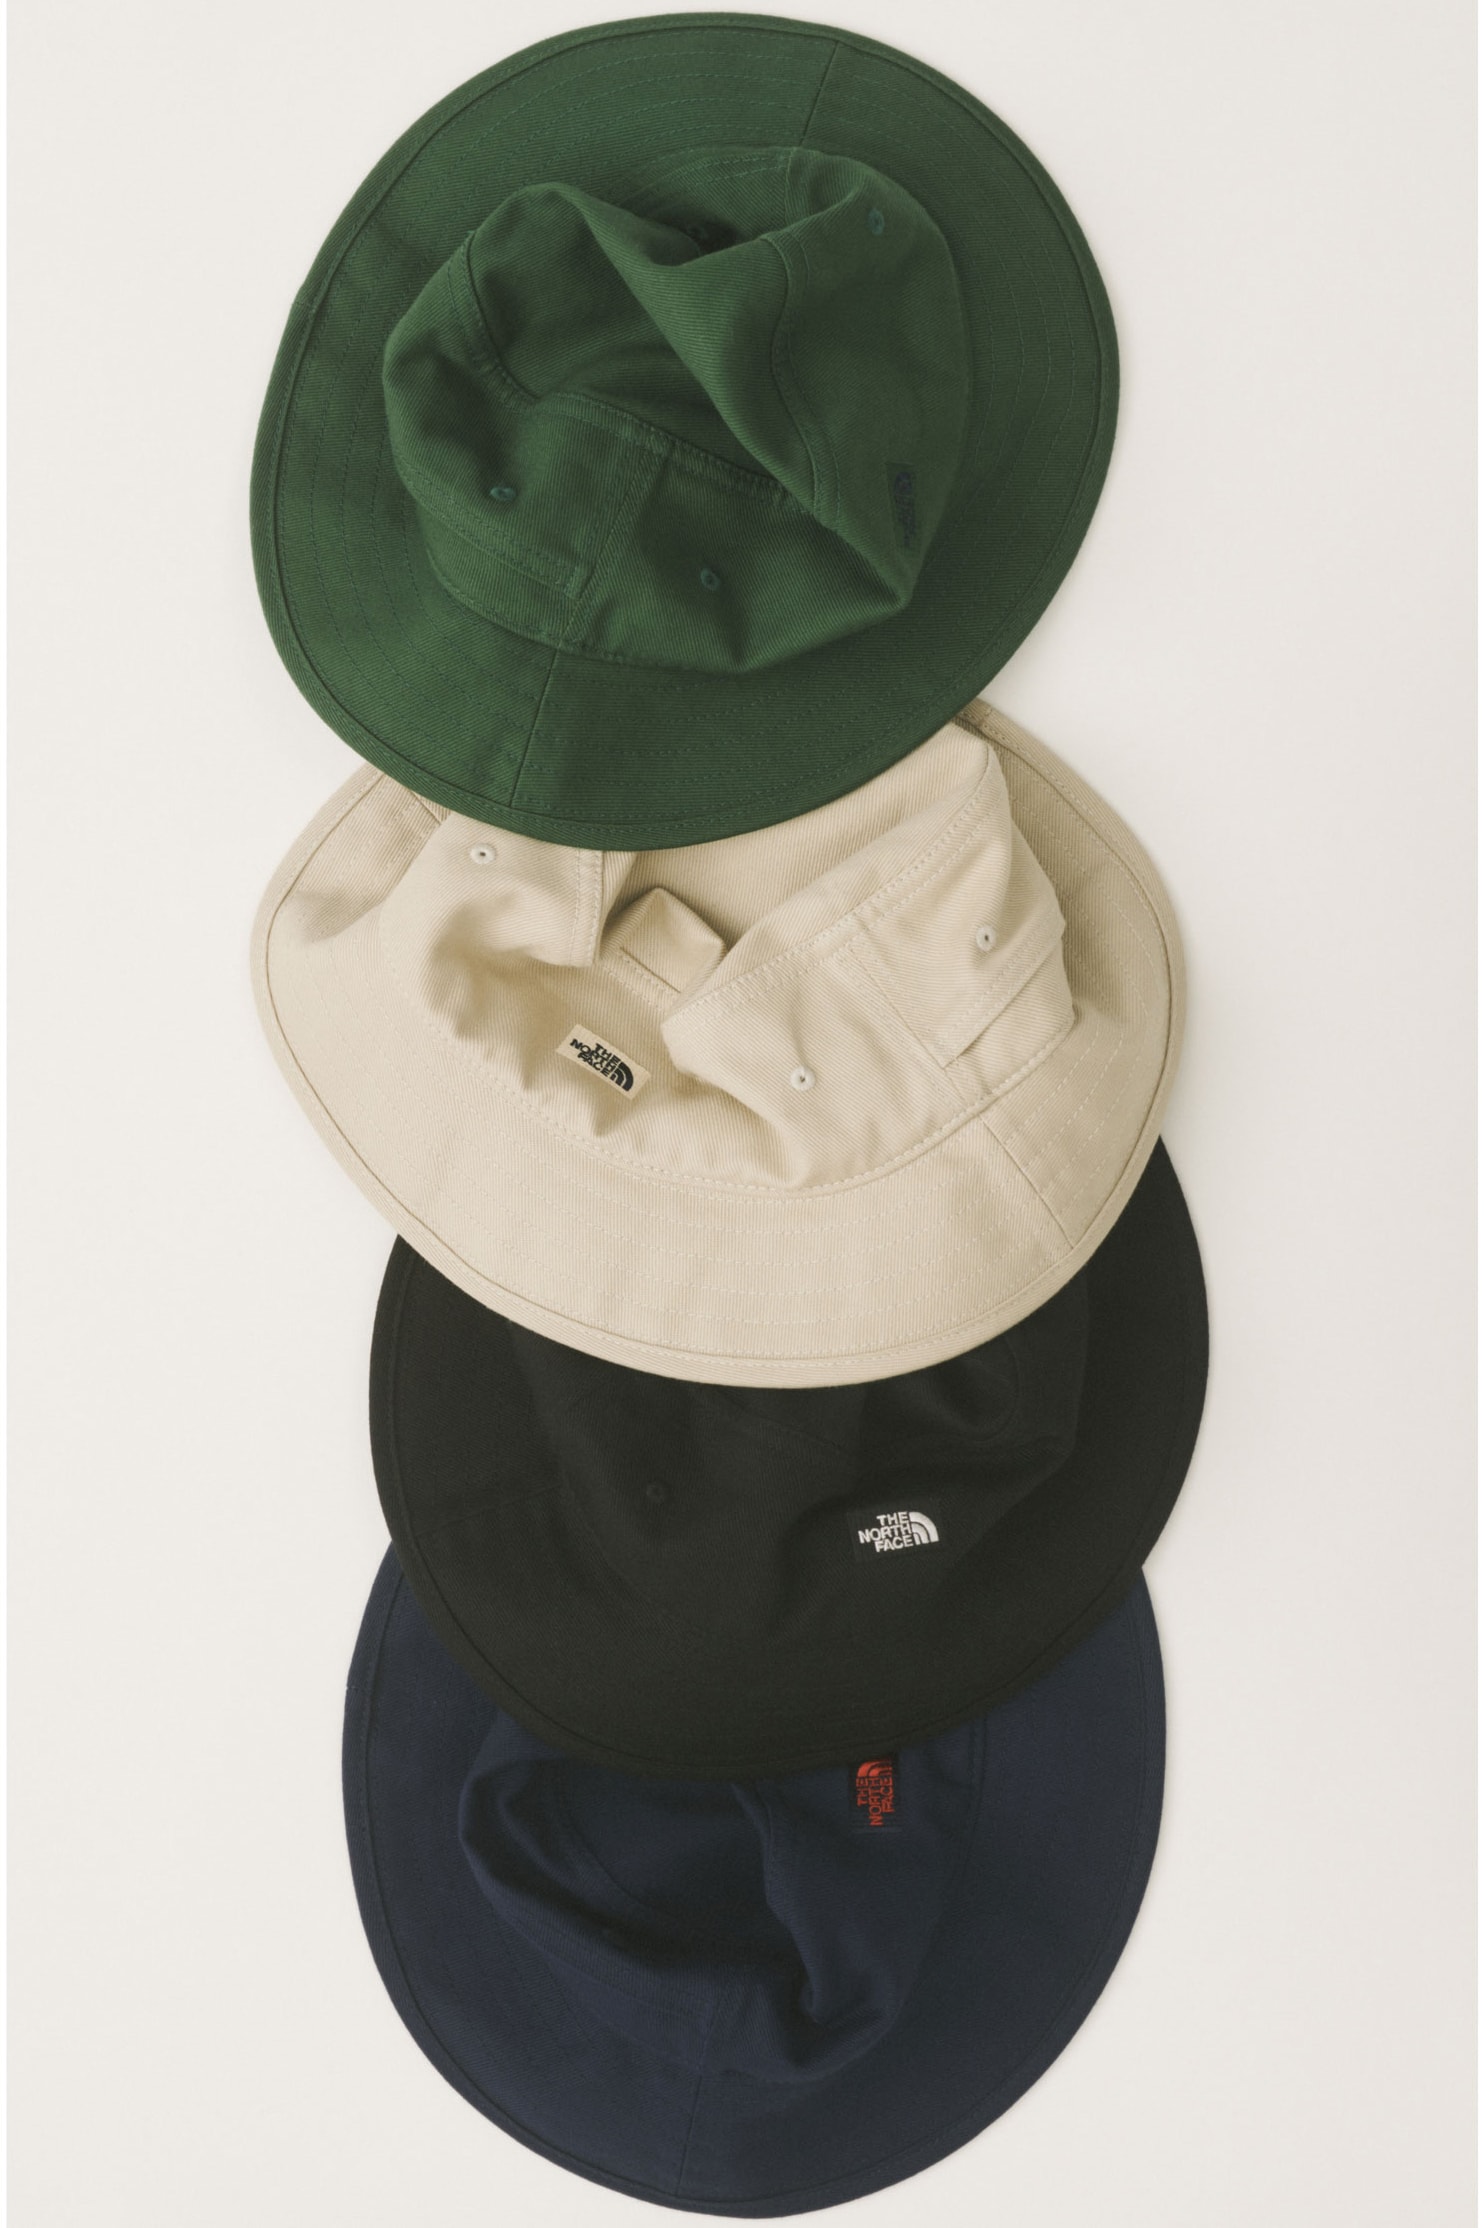 THE NORTH FACE PURPLE LABEL SS19 Lookbook nanamica eiichiro homma jackets shirts hats hoodies